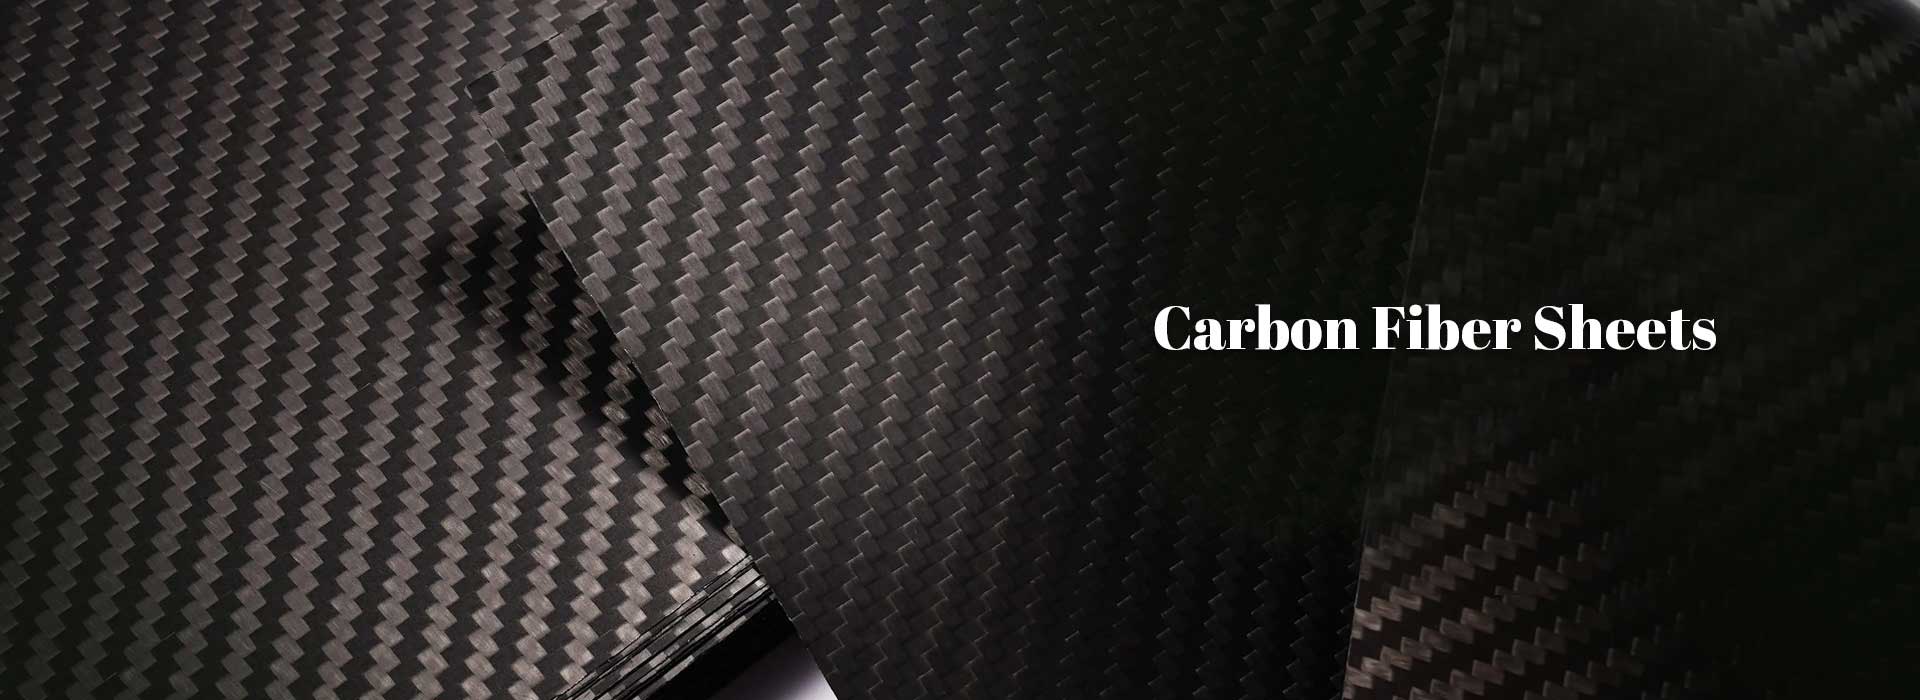 Carbon Fiber Sheets | NitPro Composites